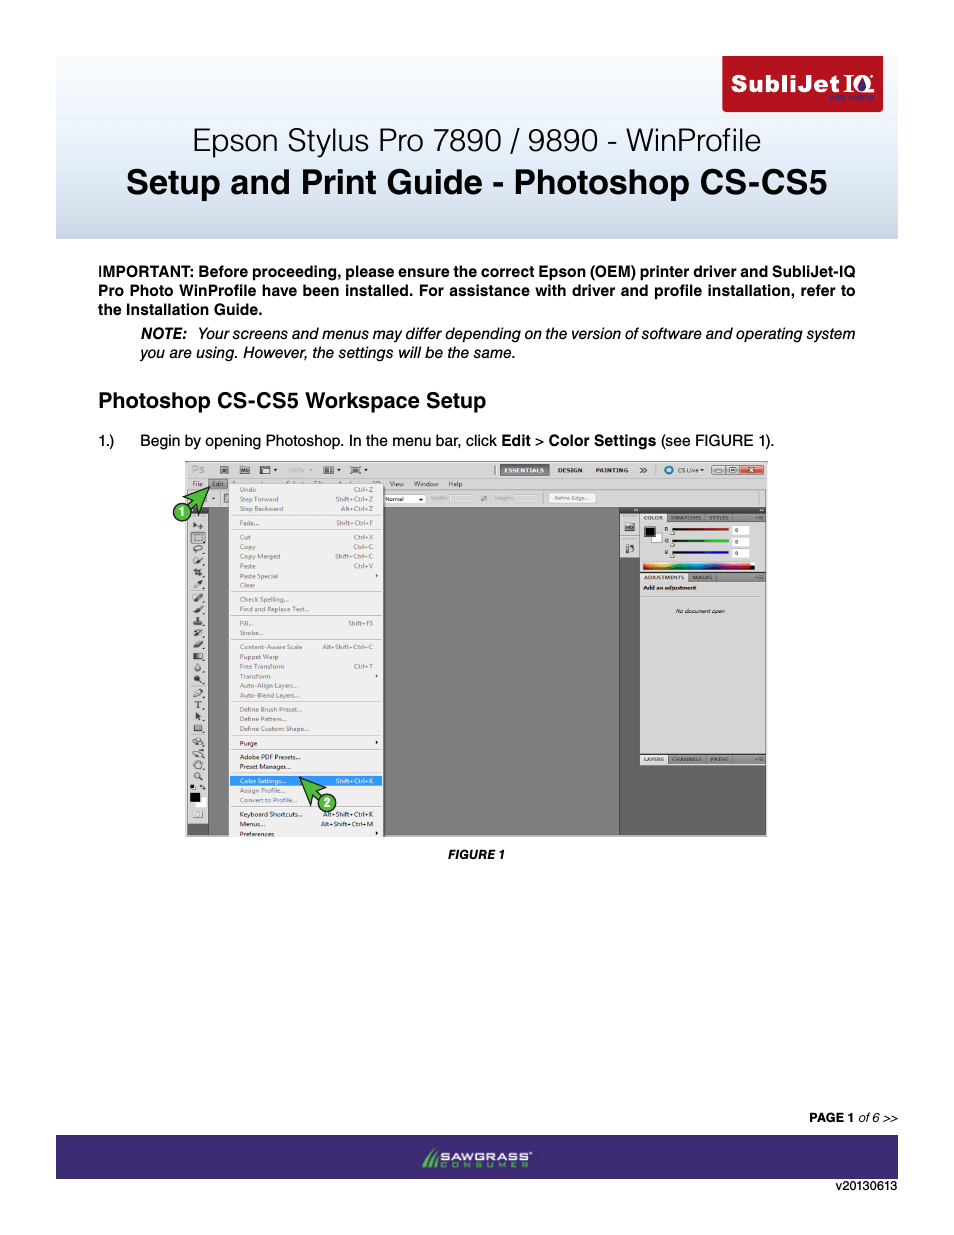 SubliJet IQ Epson Stylus Pro 7890 - IQ Pro Photo (Windows ICC Profile Setup): Print & Setup Guide Photoshop CS - CS5